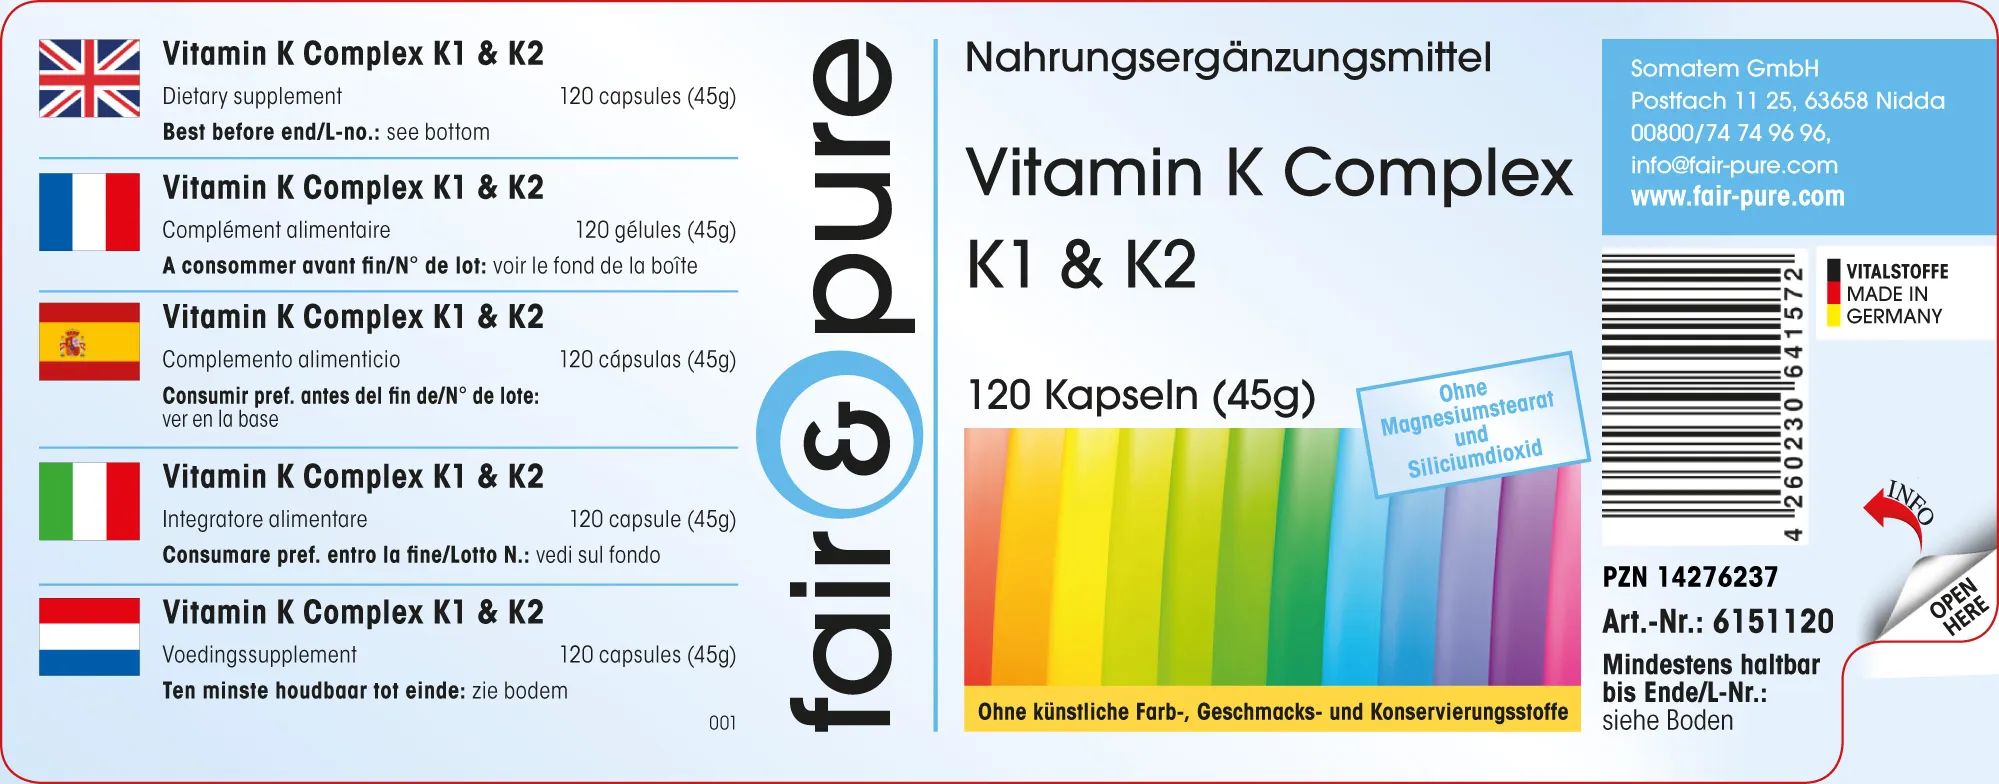 Vitamine K Complex K1 & K2